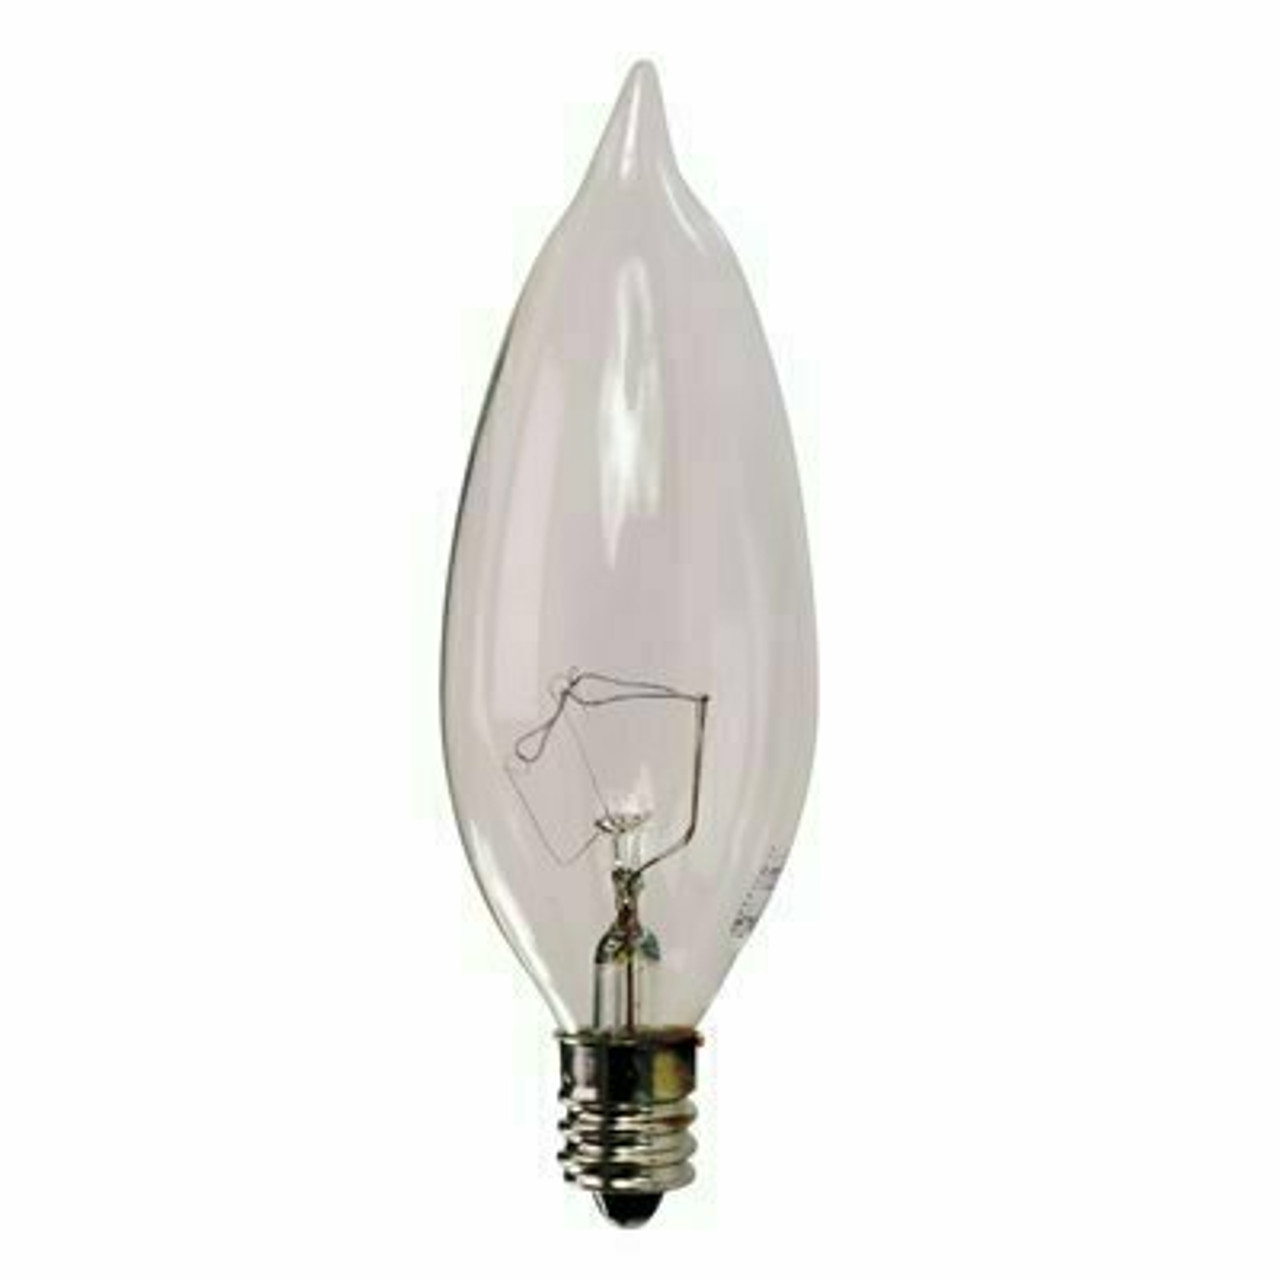 Sylvania Sylvania Incandescent Decorative Lamp B10, 25 Watt, 120 Volts, Candelabra Base, Frosted